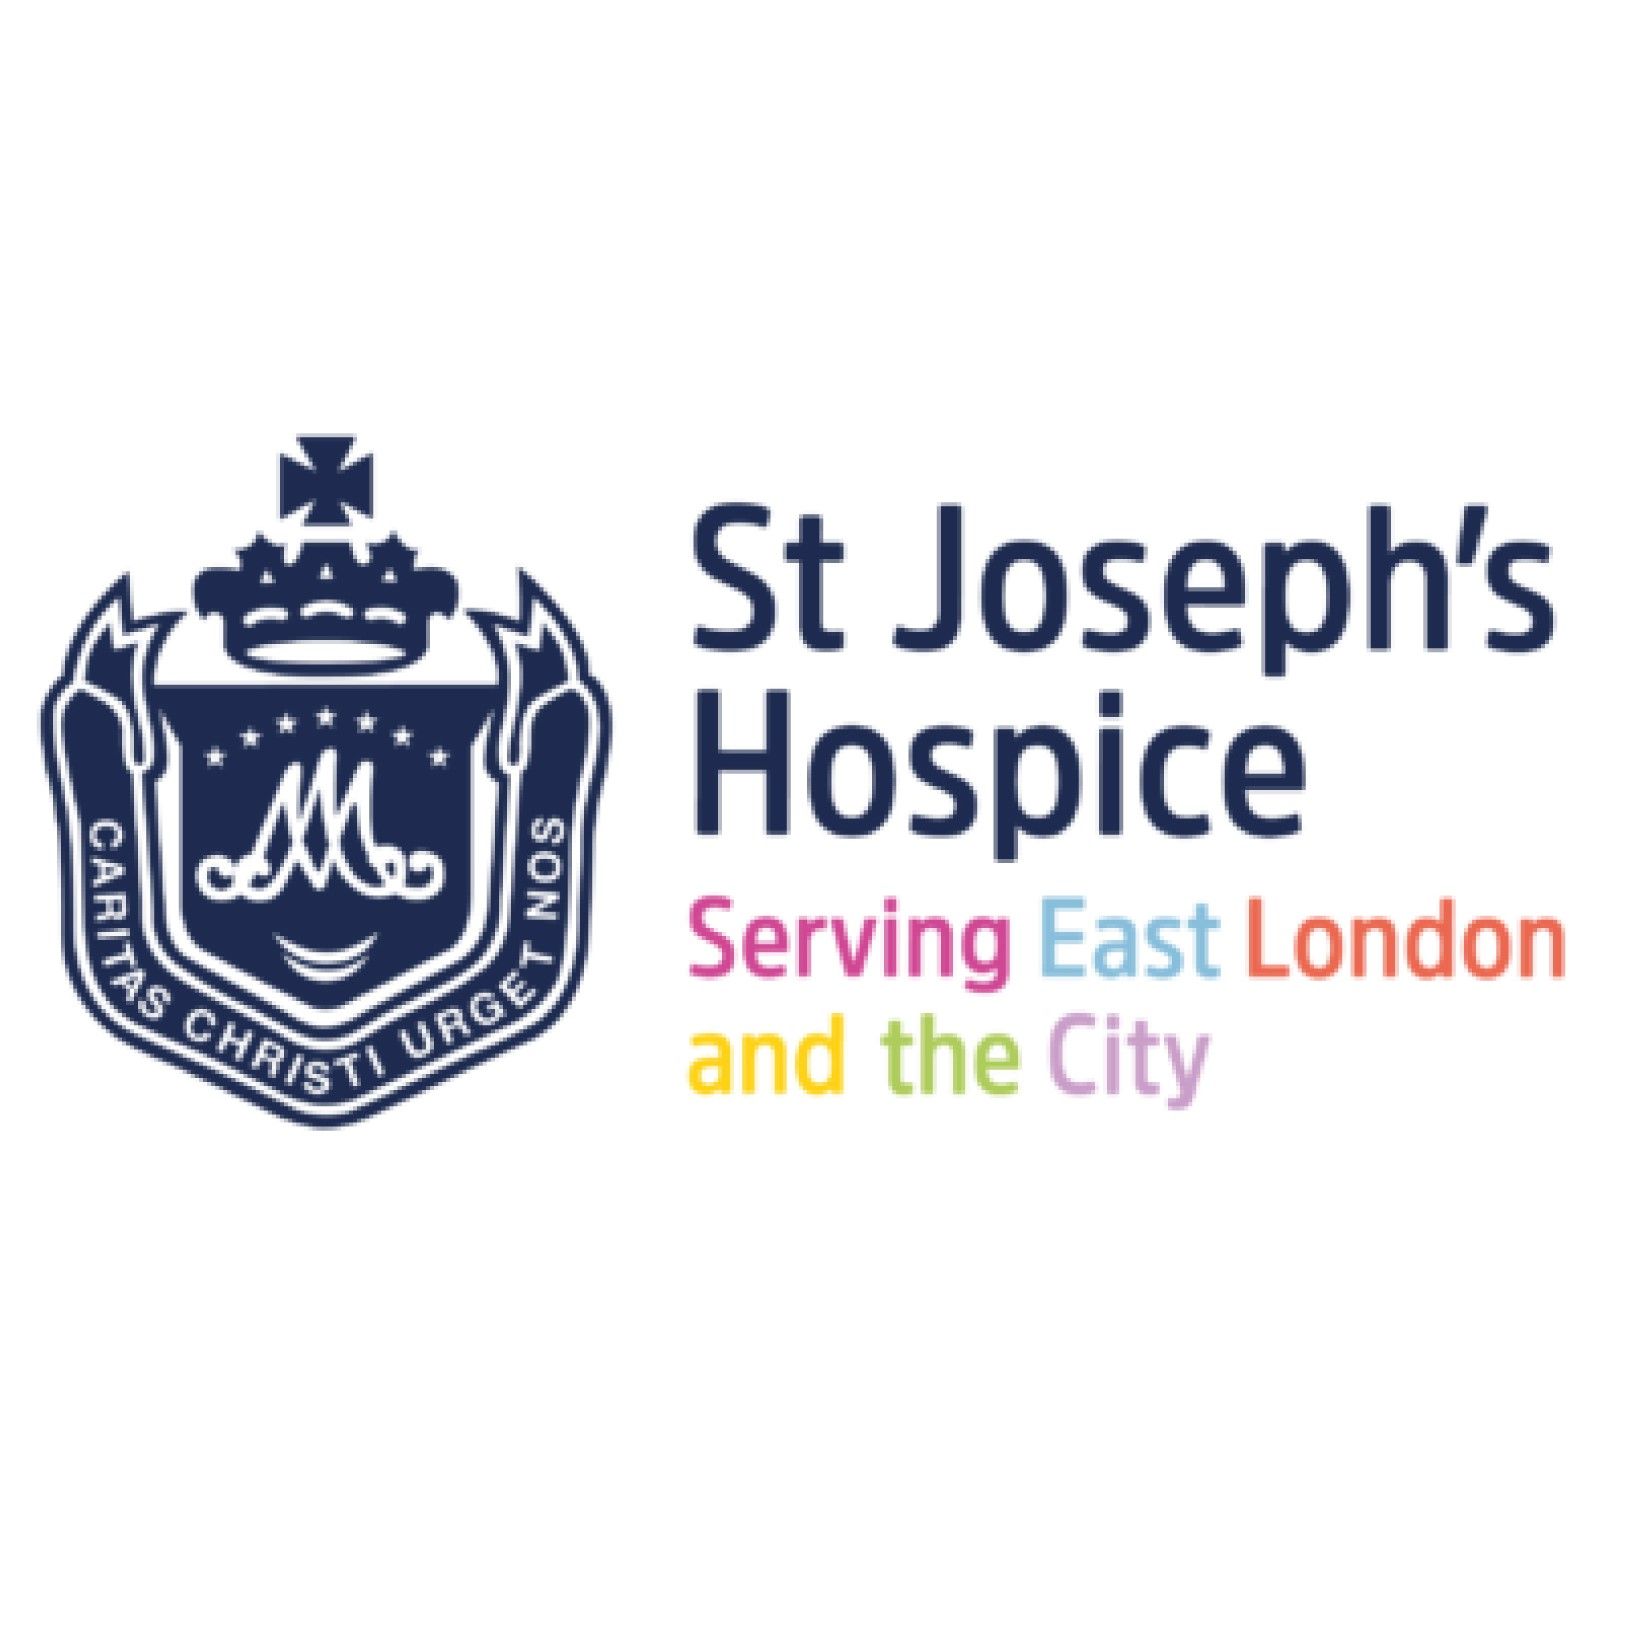 st josephs hospice square logo